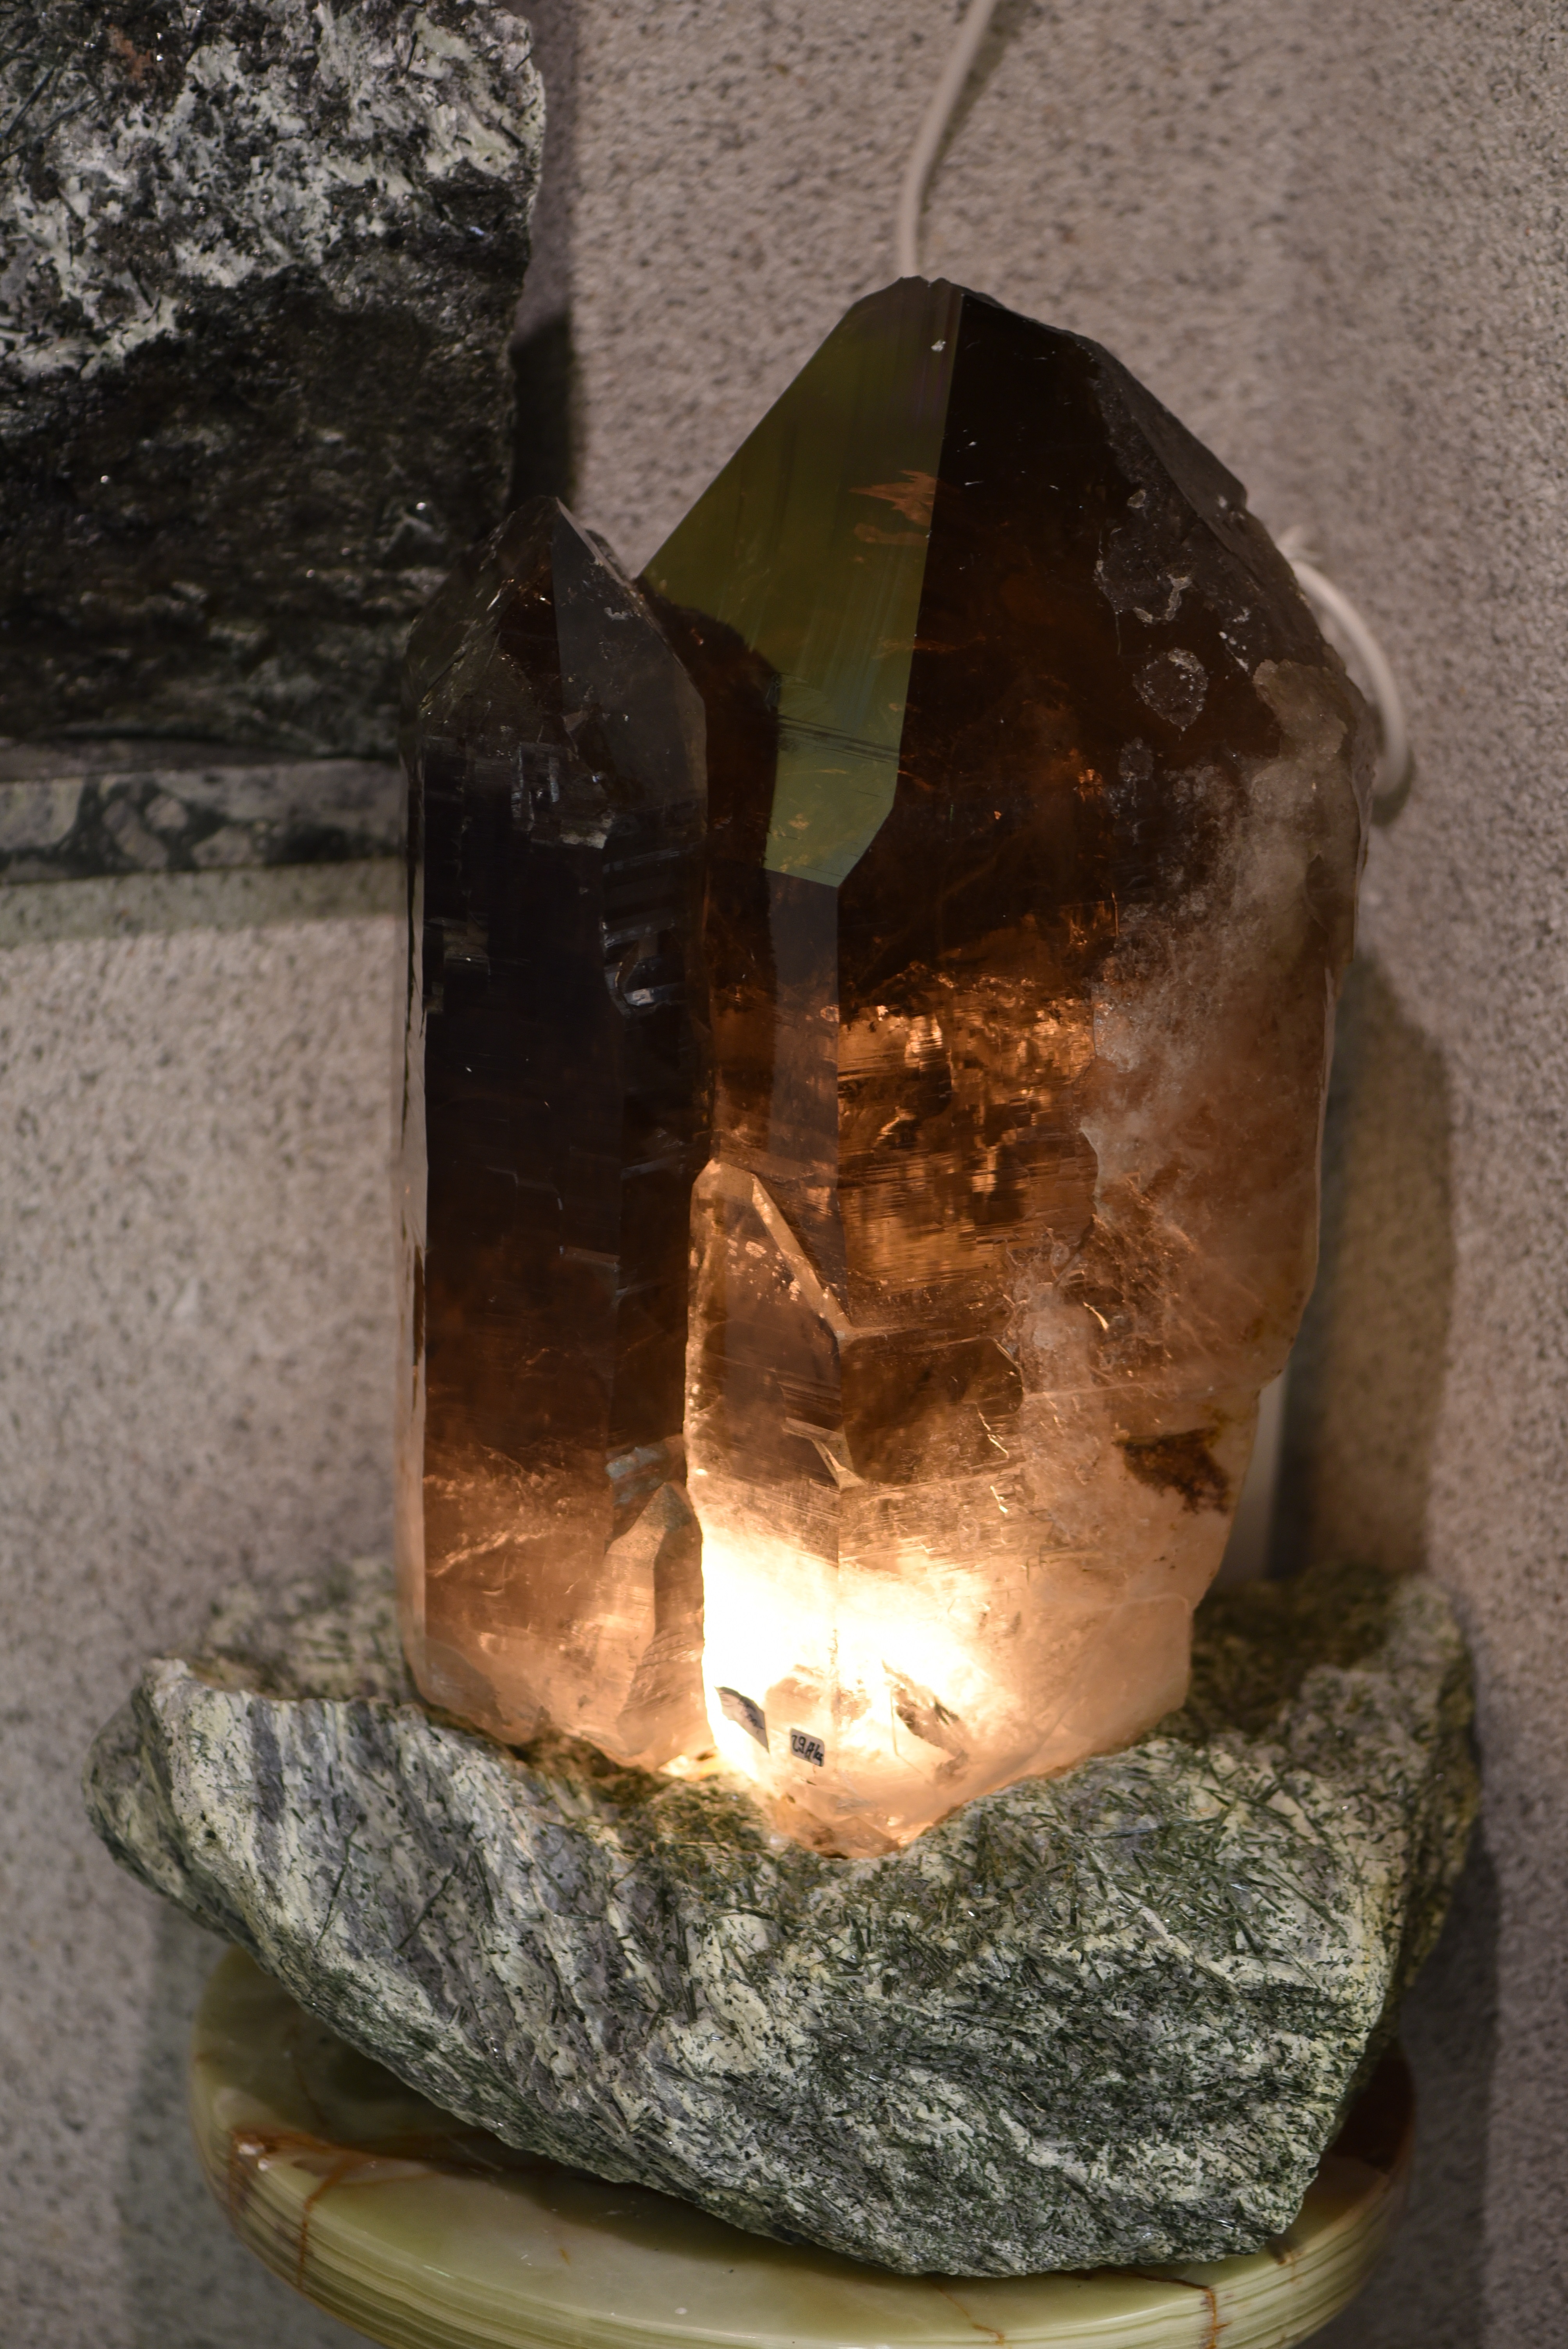 Smoky quartz with actinolite base